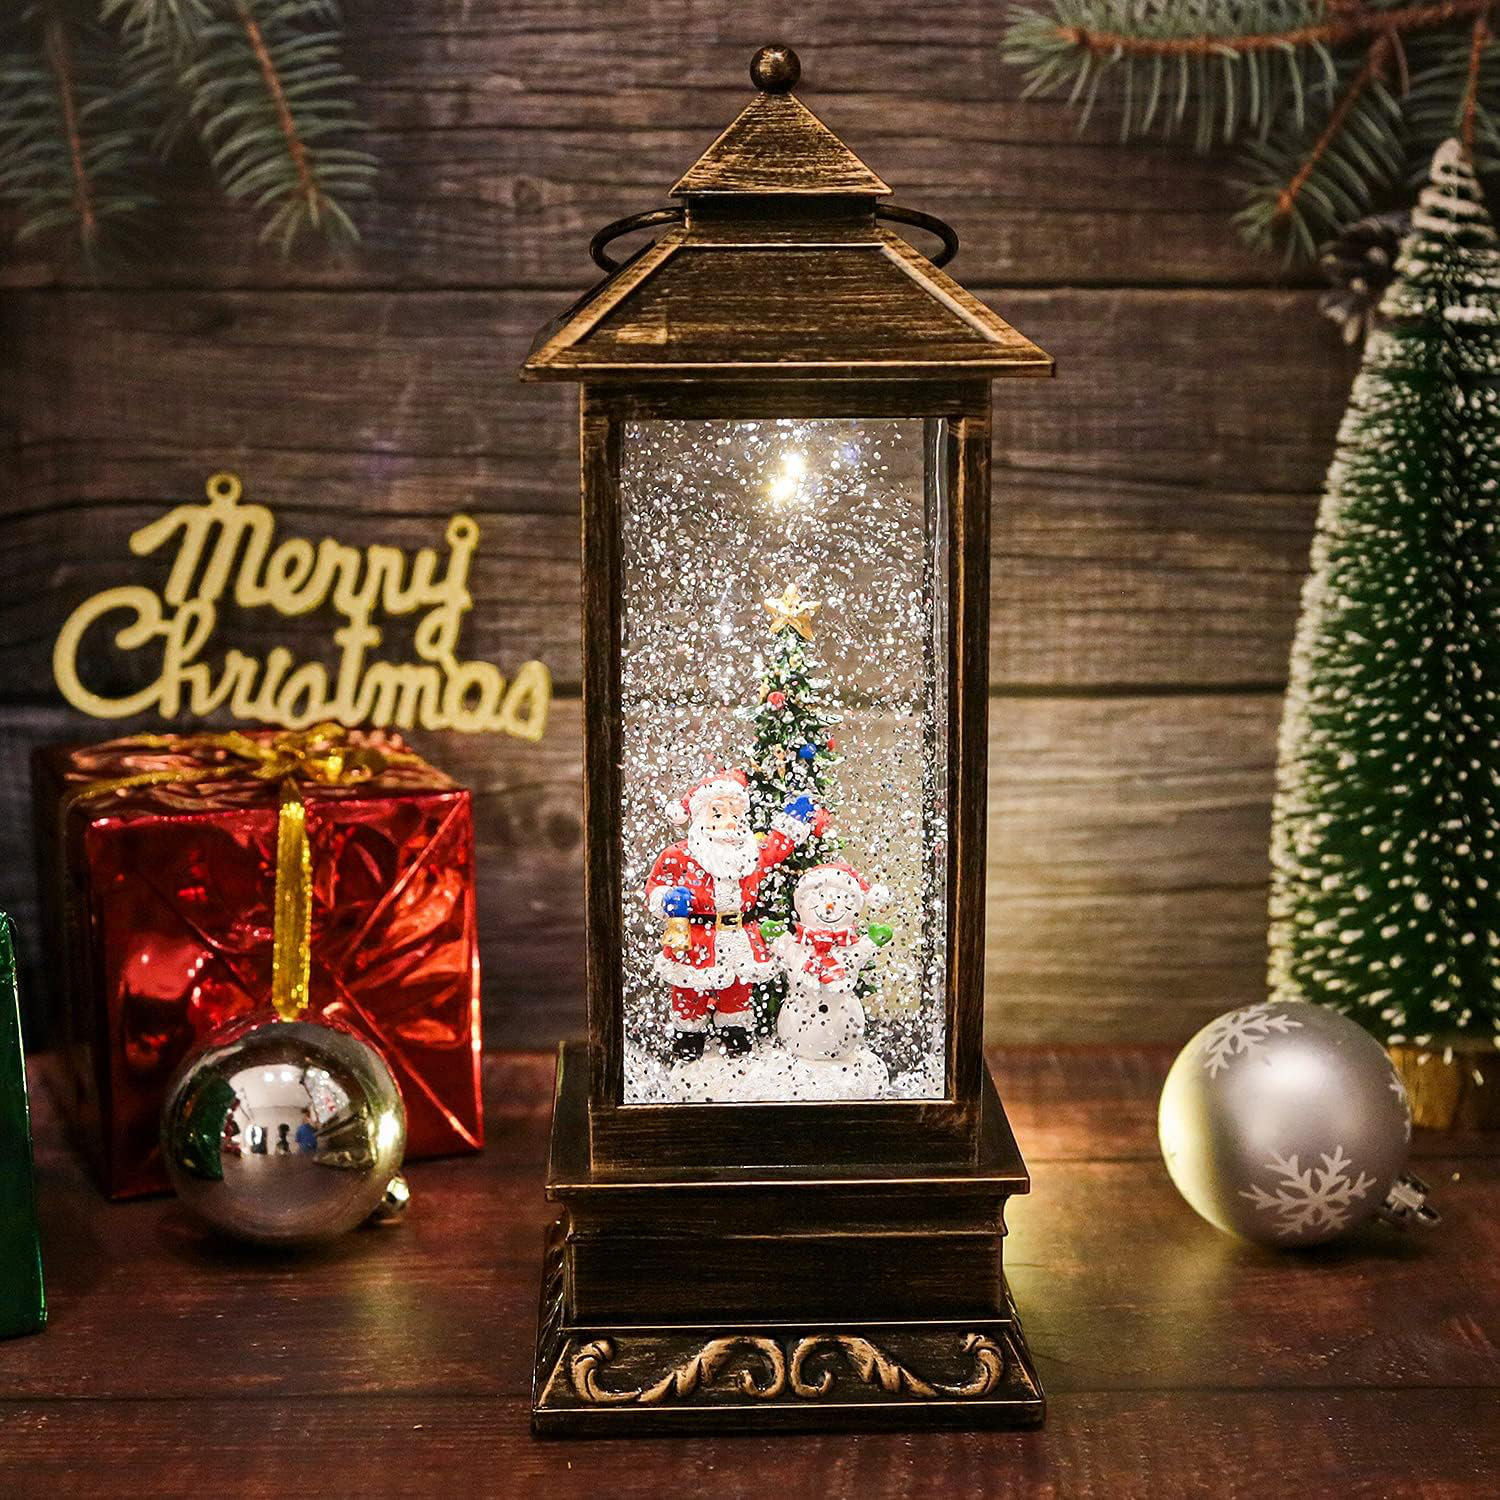 Christmas Vintage LED Lantern Battery Operated,LED Lantern Indoor Lanterns Decorative Candle Lamp Seasonal Decorations for Christmas Home Living Room